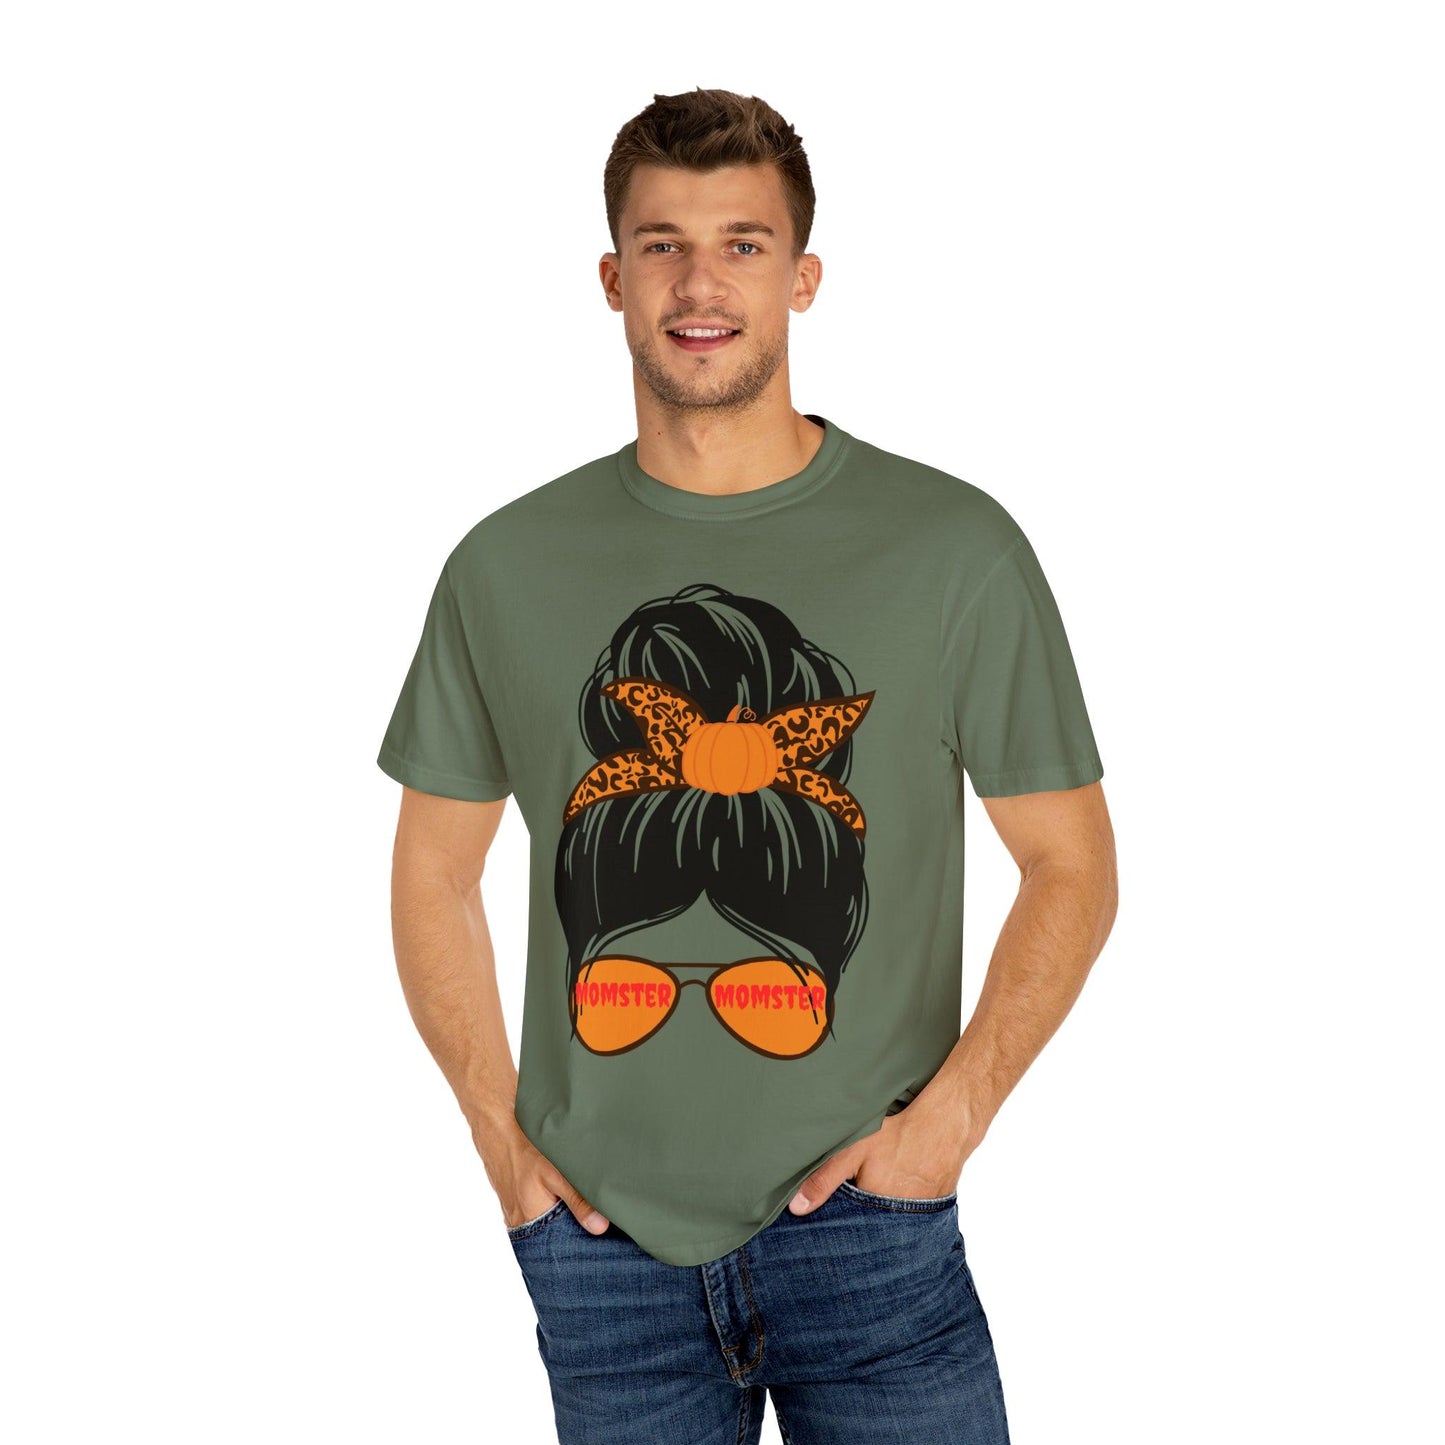 Retro Halloween Tshirt, Momster Shirt, Vintage Shirt Halloween Shirt - Giftsmojo